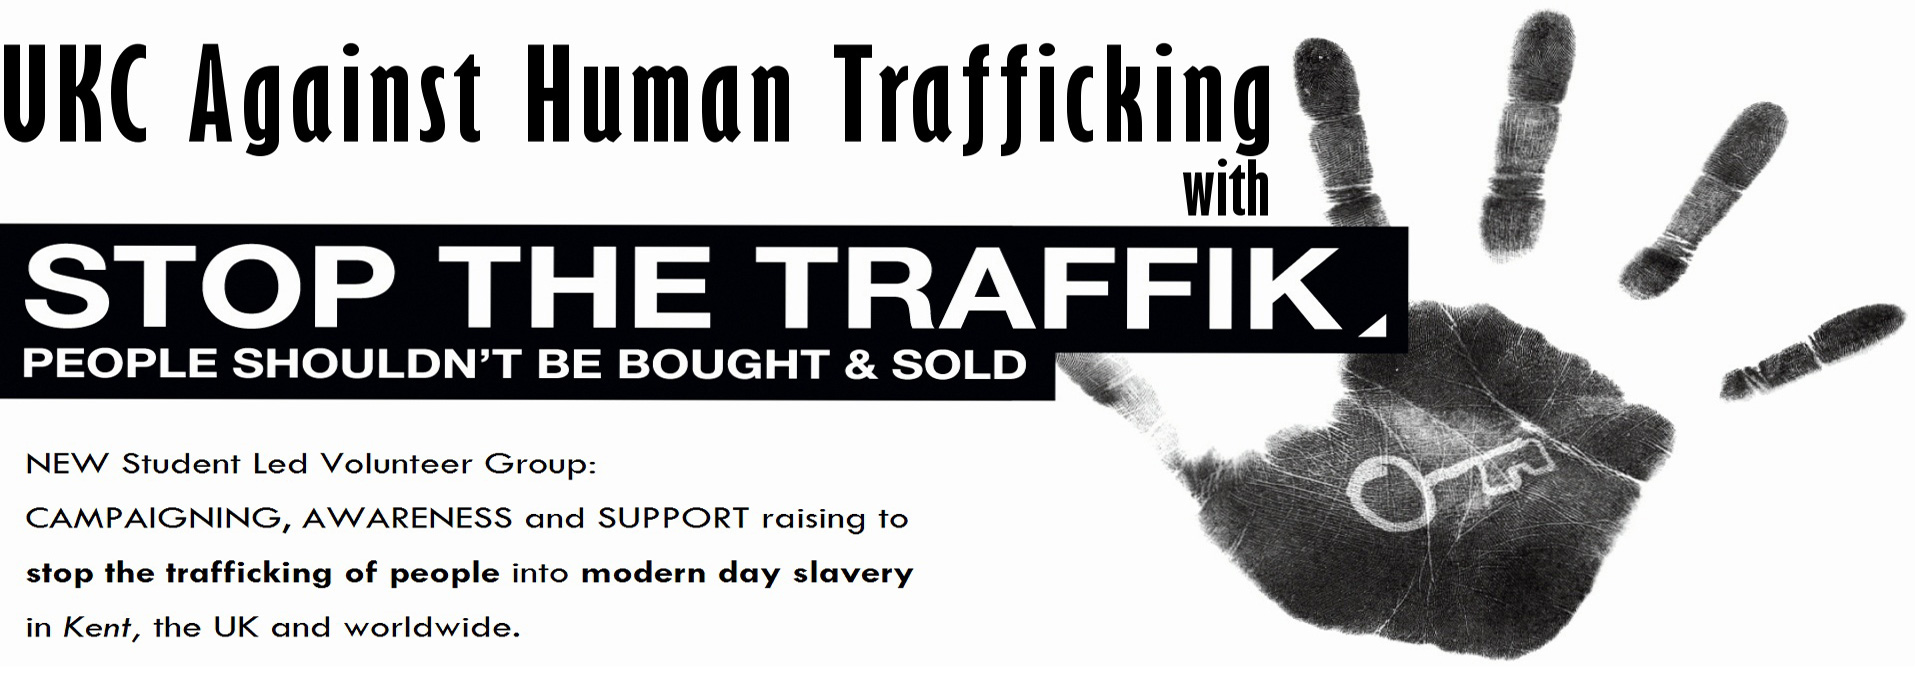 UKC Against Human Trafficking